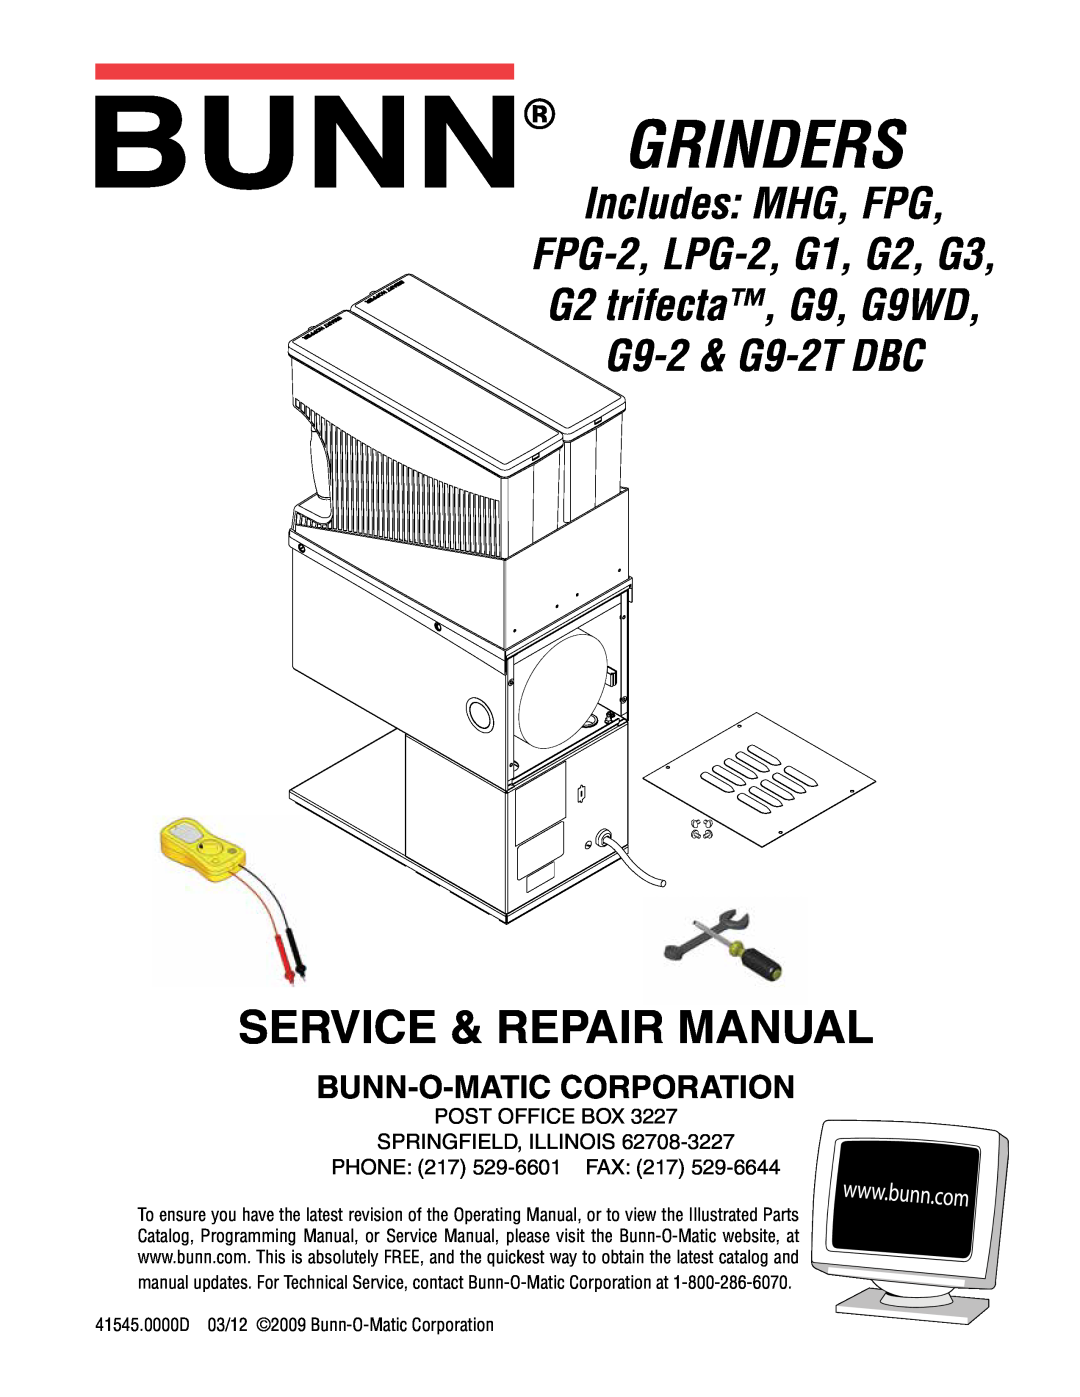 Bunn service manual Bunn-O-Maticcorporation, Grinders, Service & Repair Manual, G2 trifecta, G9, G9WD G9-2& G9-2TDBC 